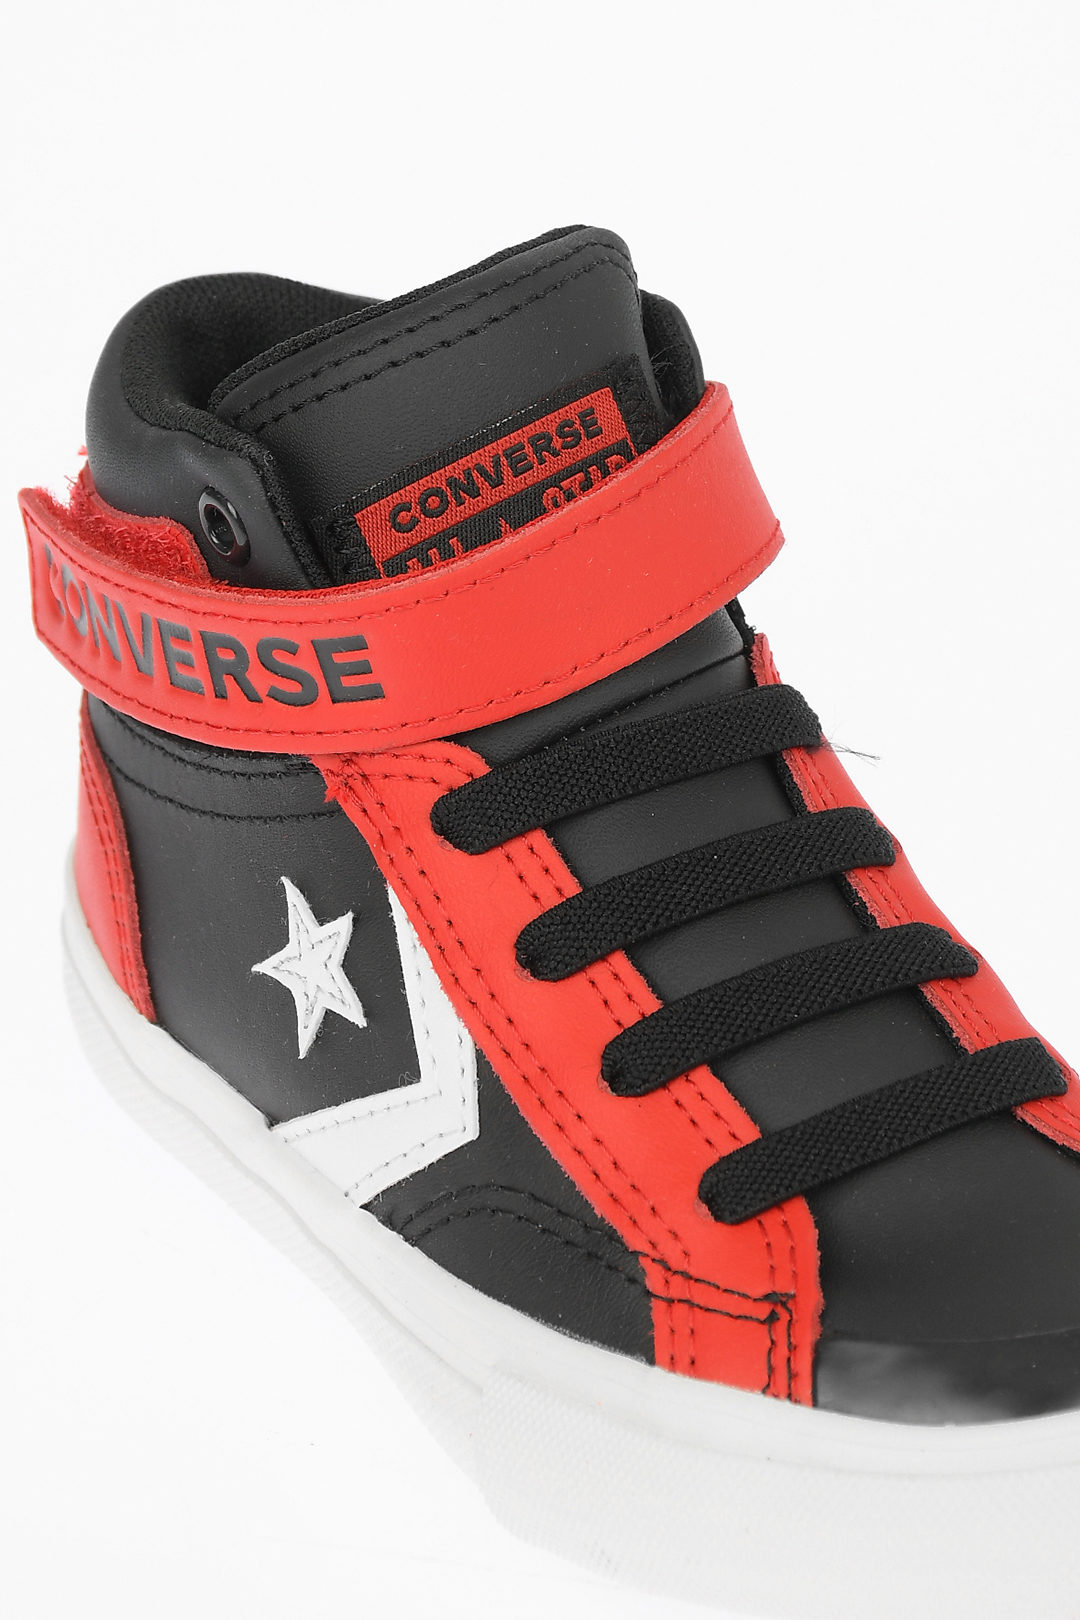 tiener Onbevredigend Beknopt Converse KIDS Leather PRO BLAZE Sneakers boys - Glamood Outlet